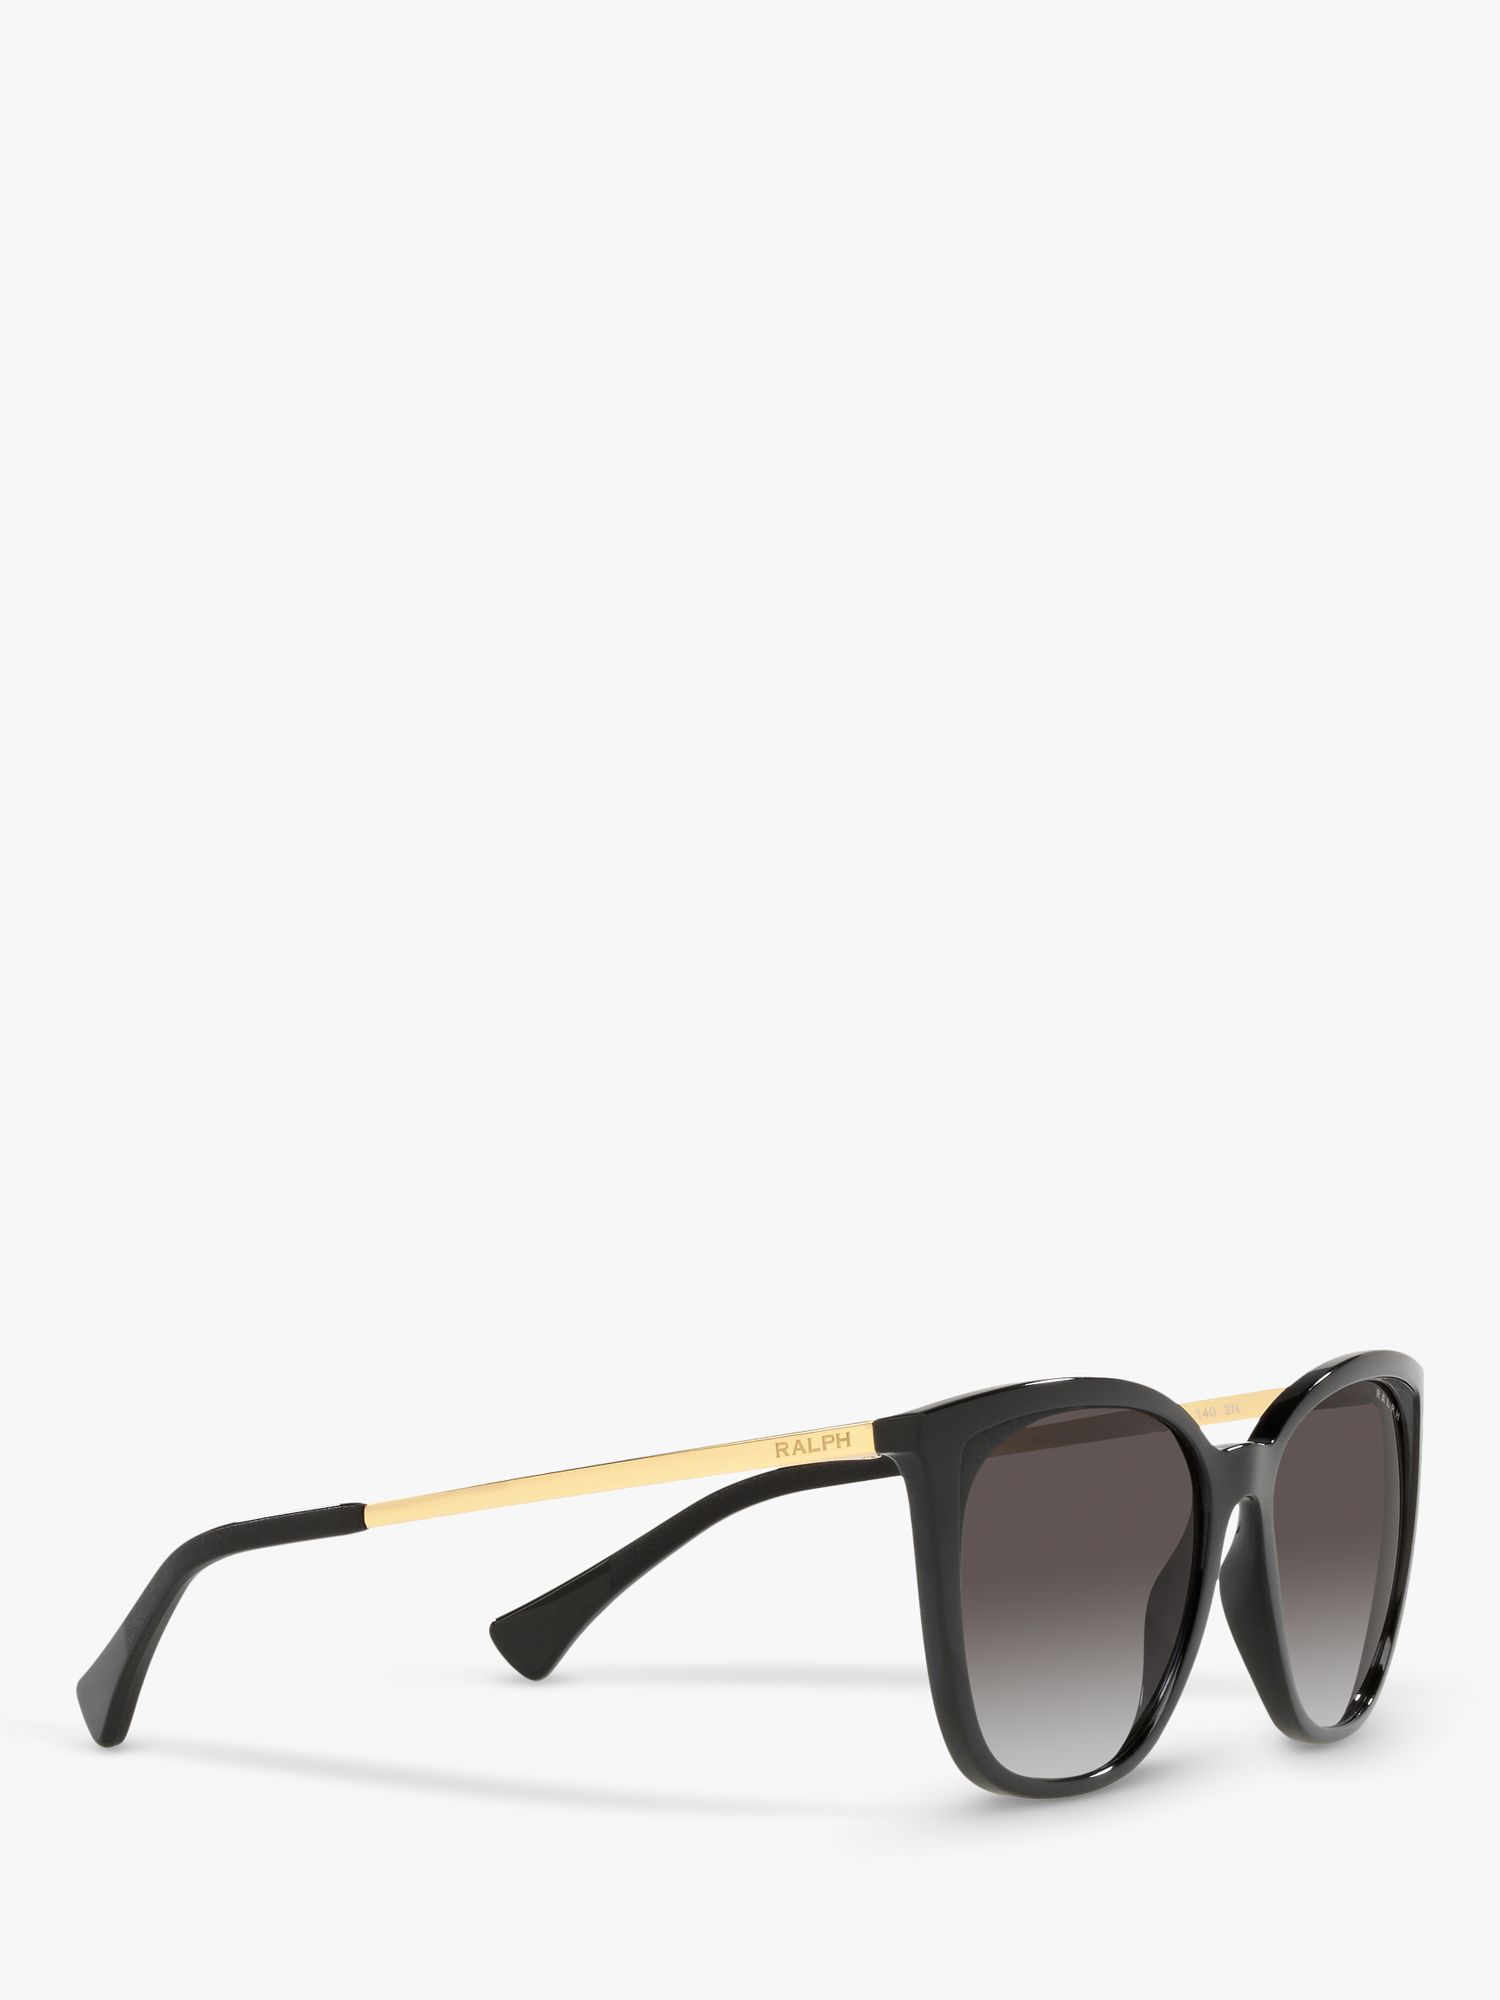 Ralph RA5280 Women's Cat's Eye Sunglasses, Shiny Black/Grey Gradient at ...